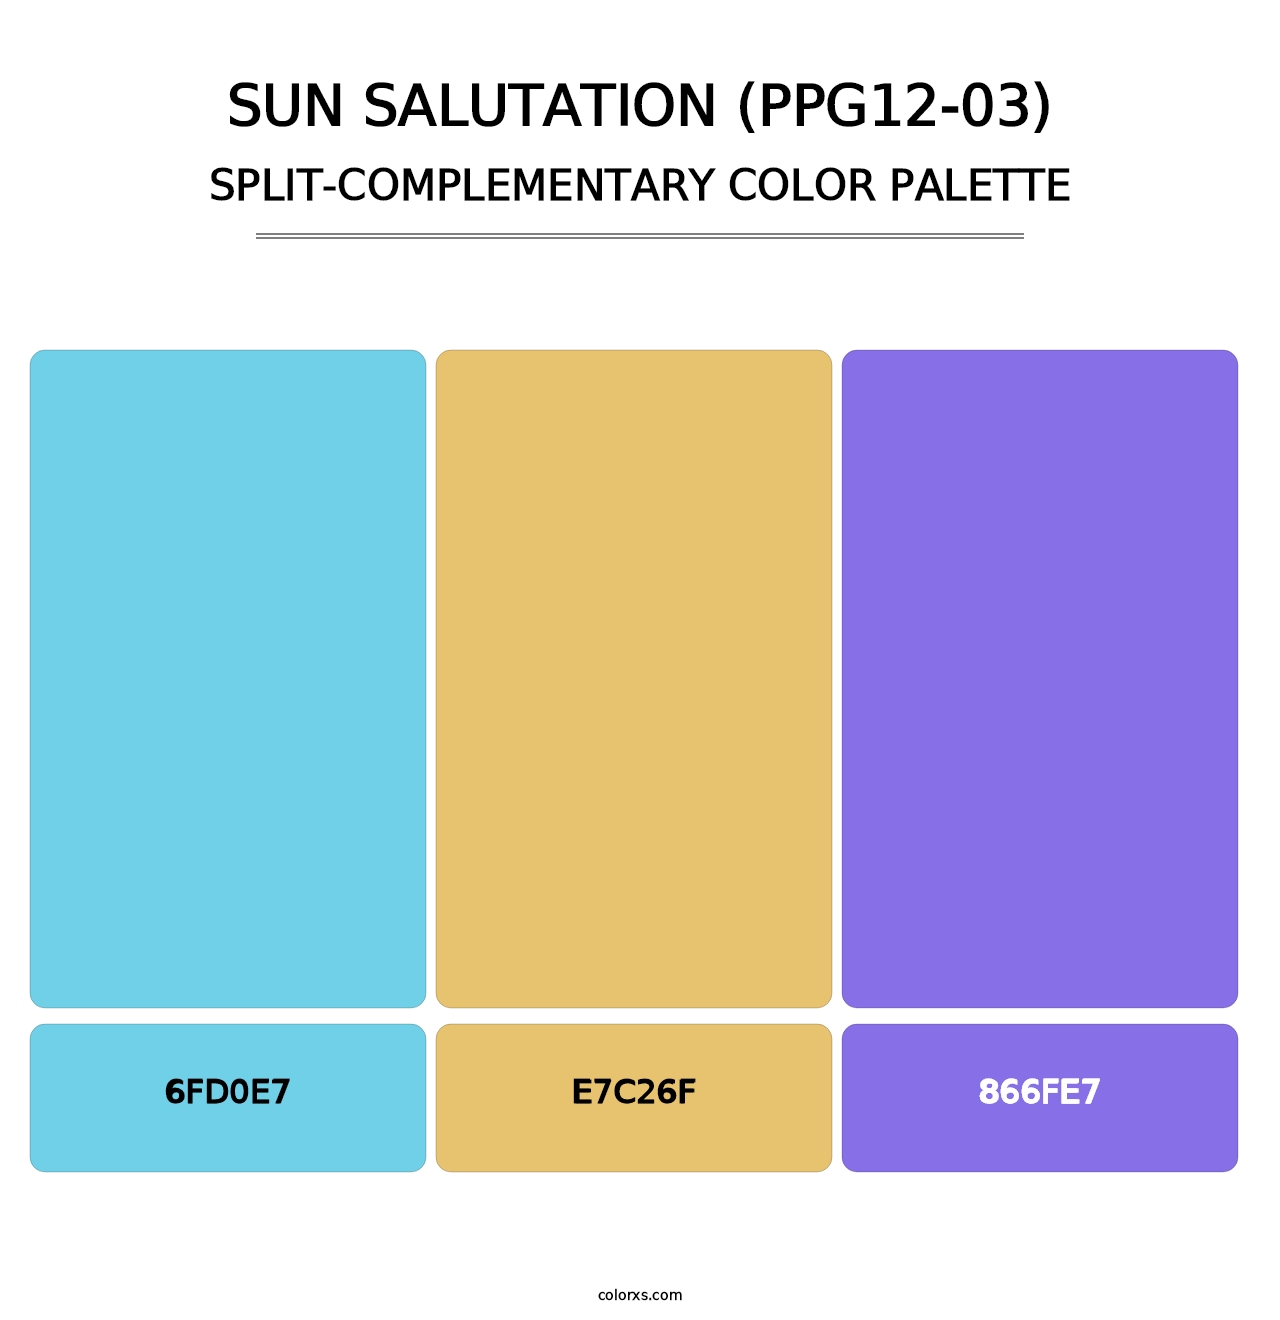 Sun Salutation (PPG12-03) - Split-Complementary Color Palette